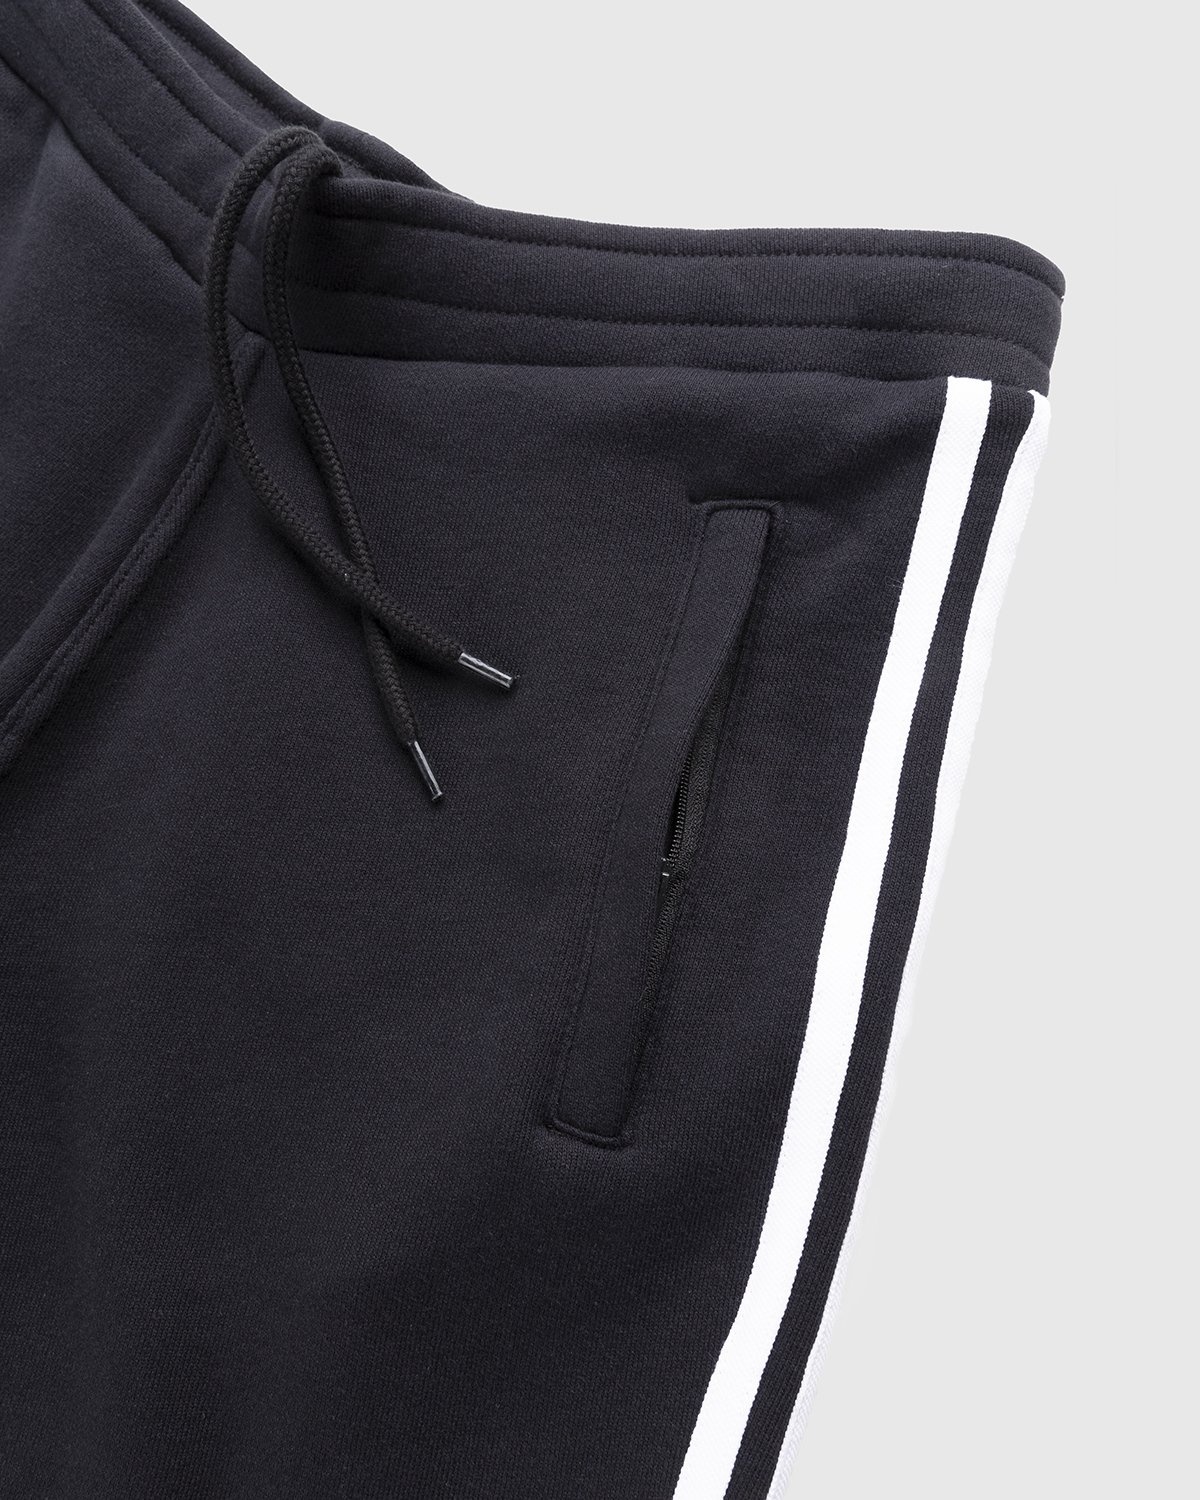 Adidas – 3 Stripe Short Black - Shorts - Black - Image 4